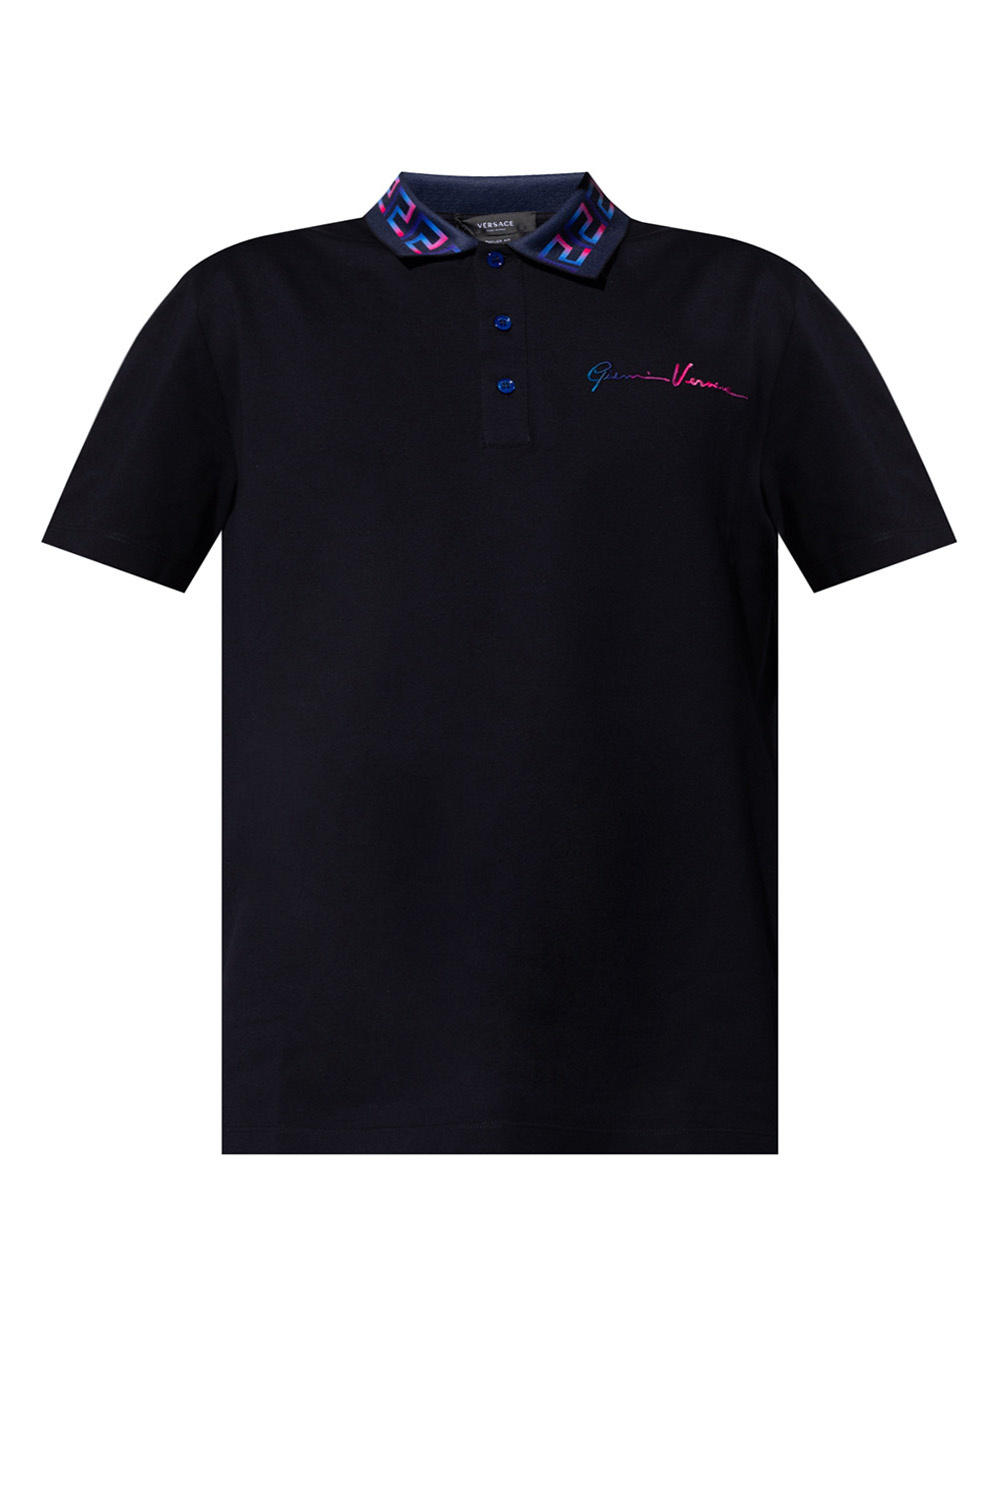 Versace Shorts polo shirt with logo